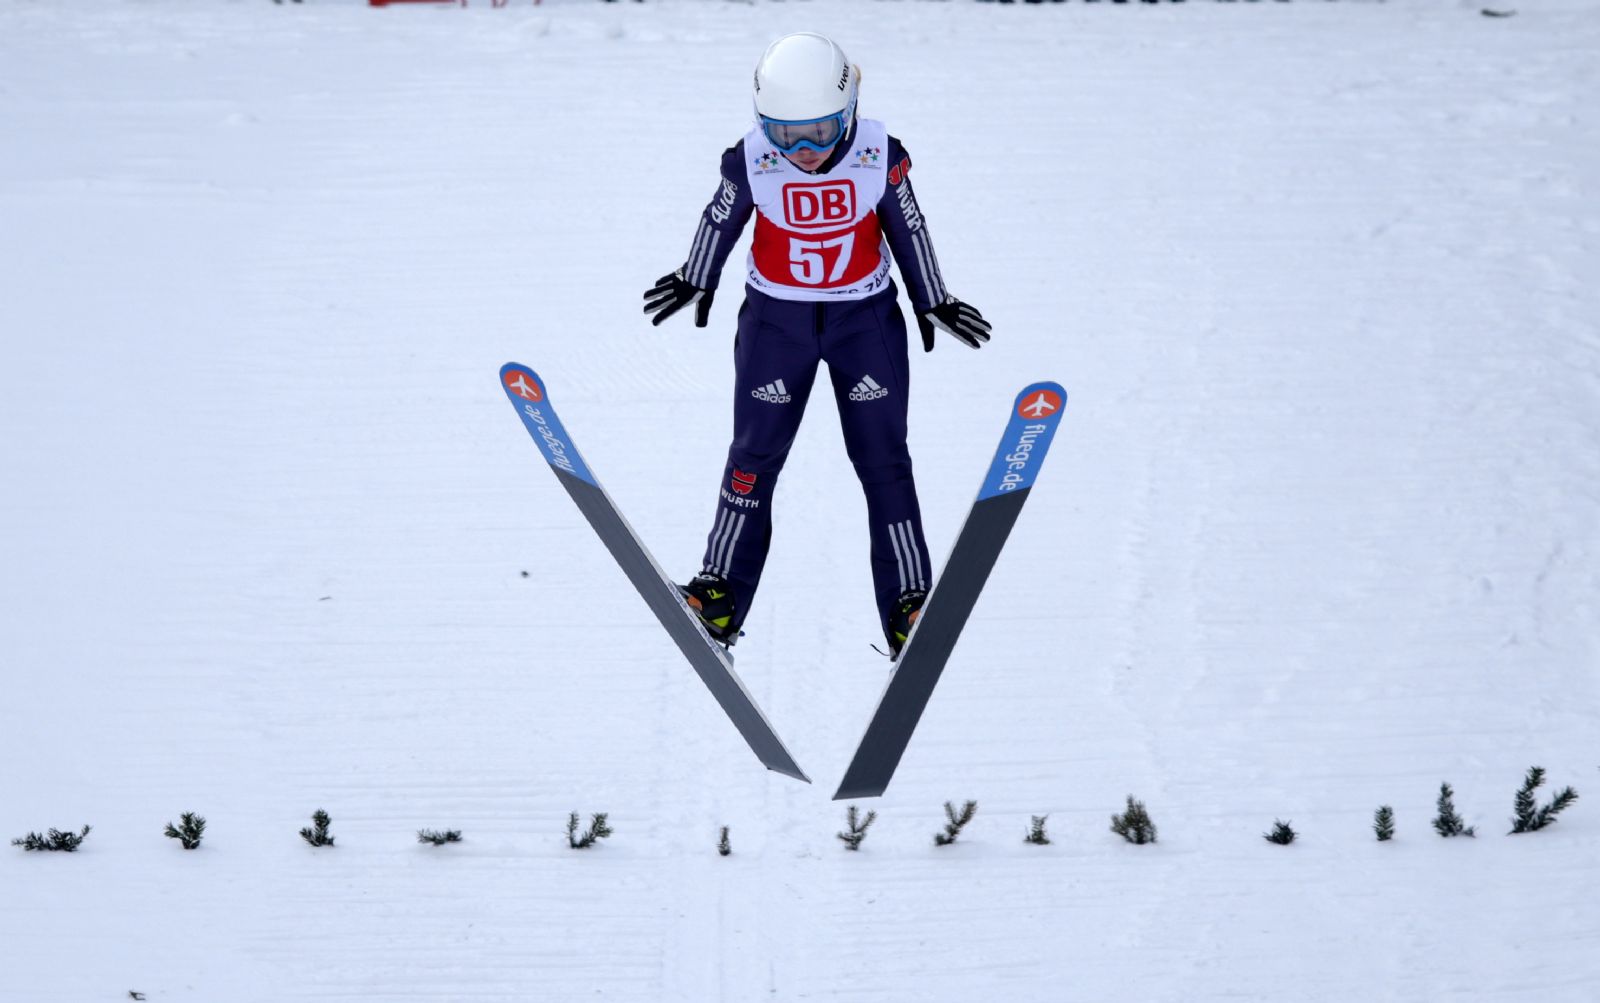 Skispringer bei Wettkampf Jugend trainiert für Olympia & Paralympics